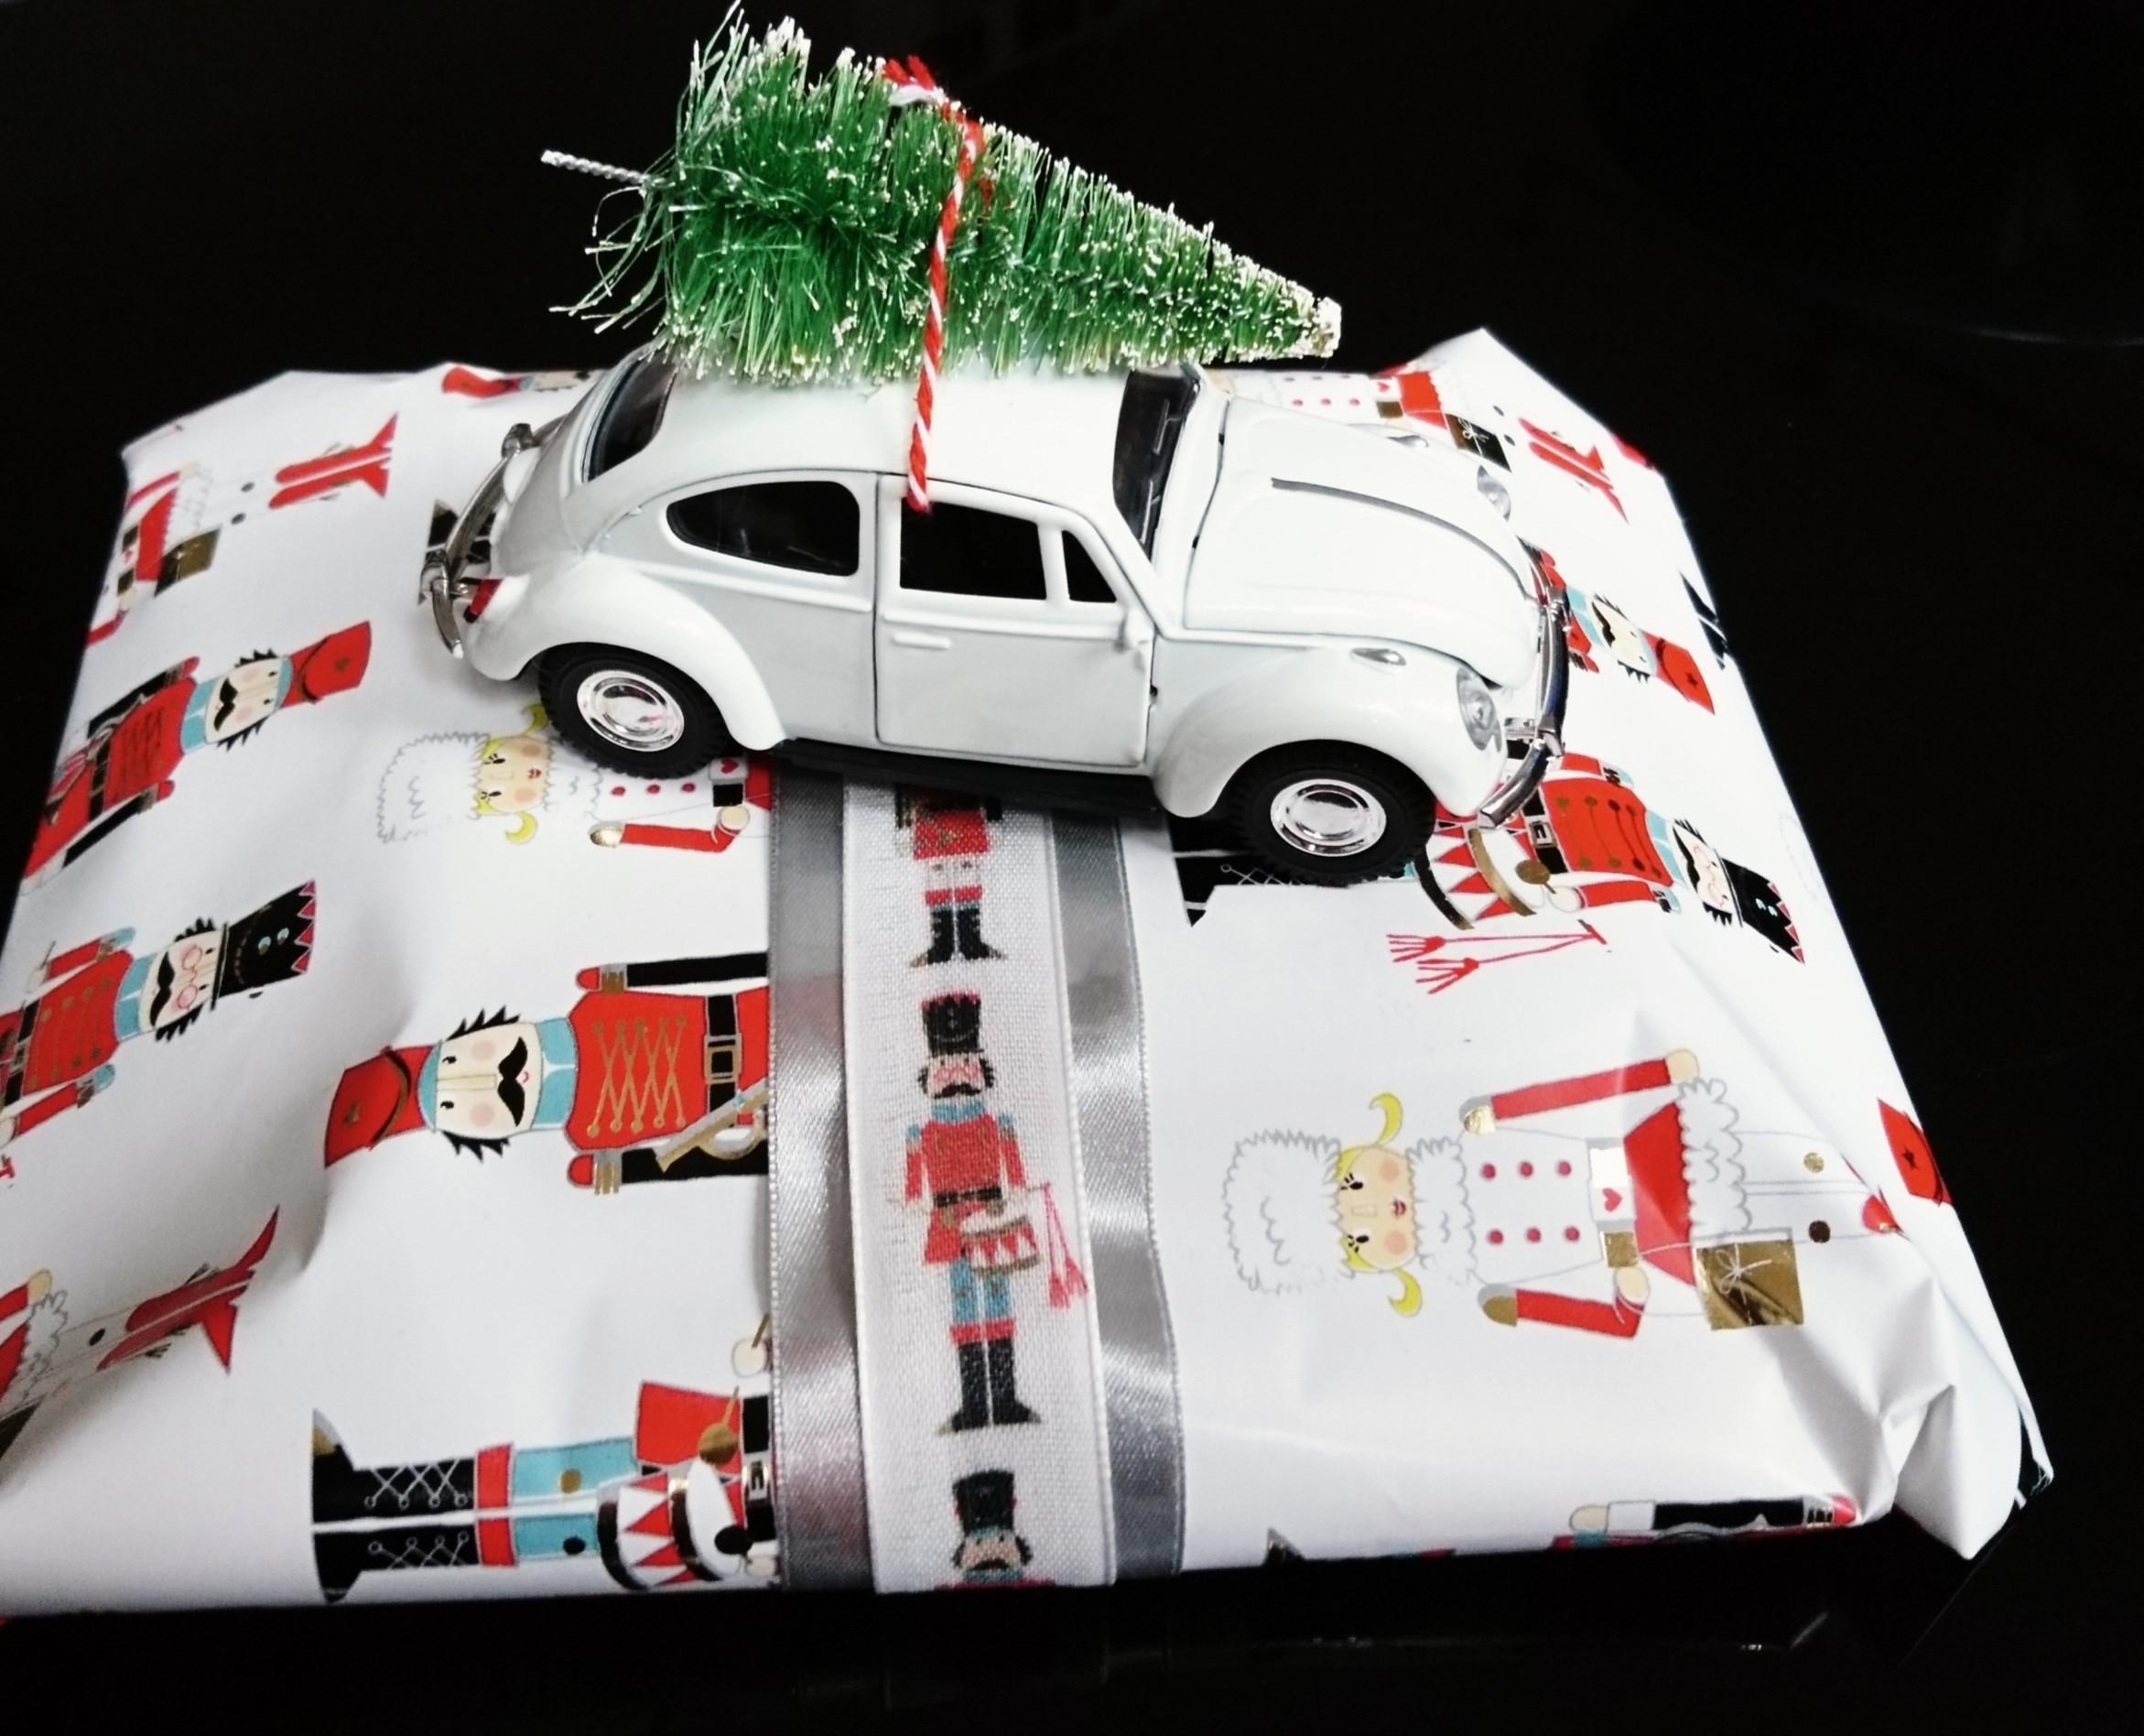 "Driving home for christmas..." 🎄🎁🎊✨
#home #living #deko #weihnachten #xmas #geschenk #christmas #auto